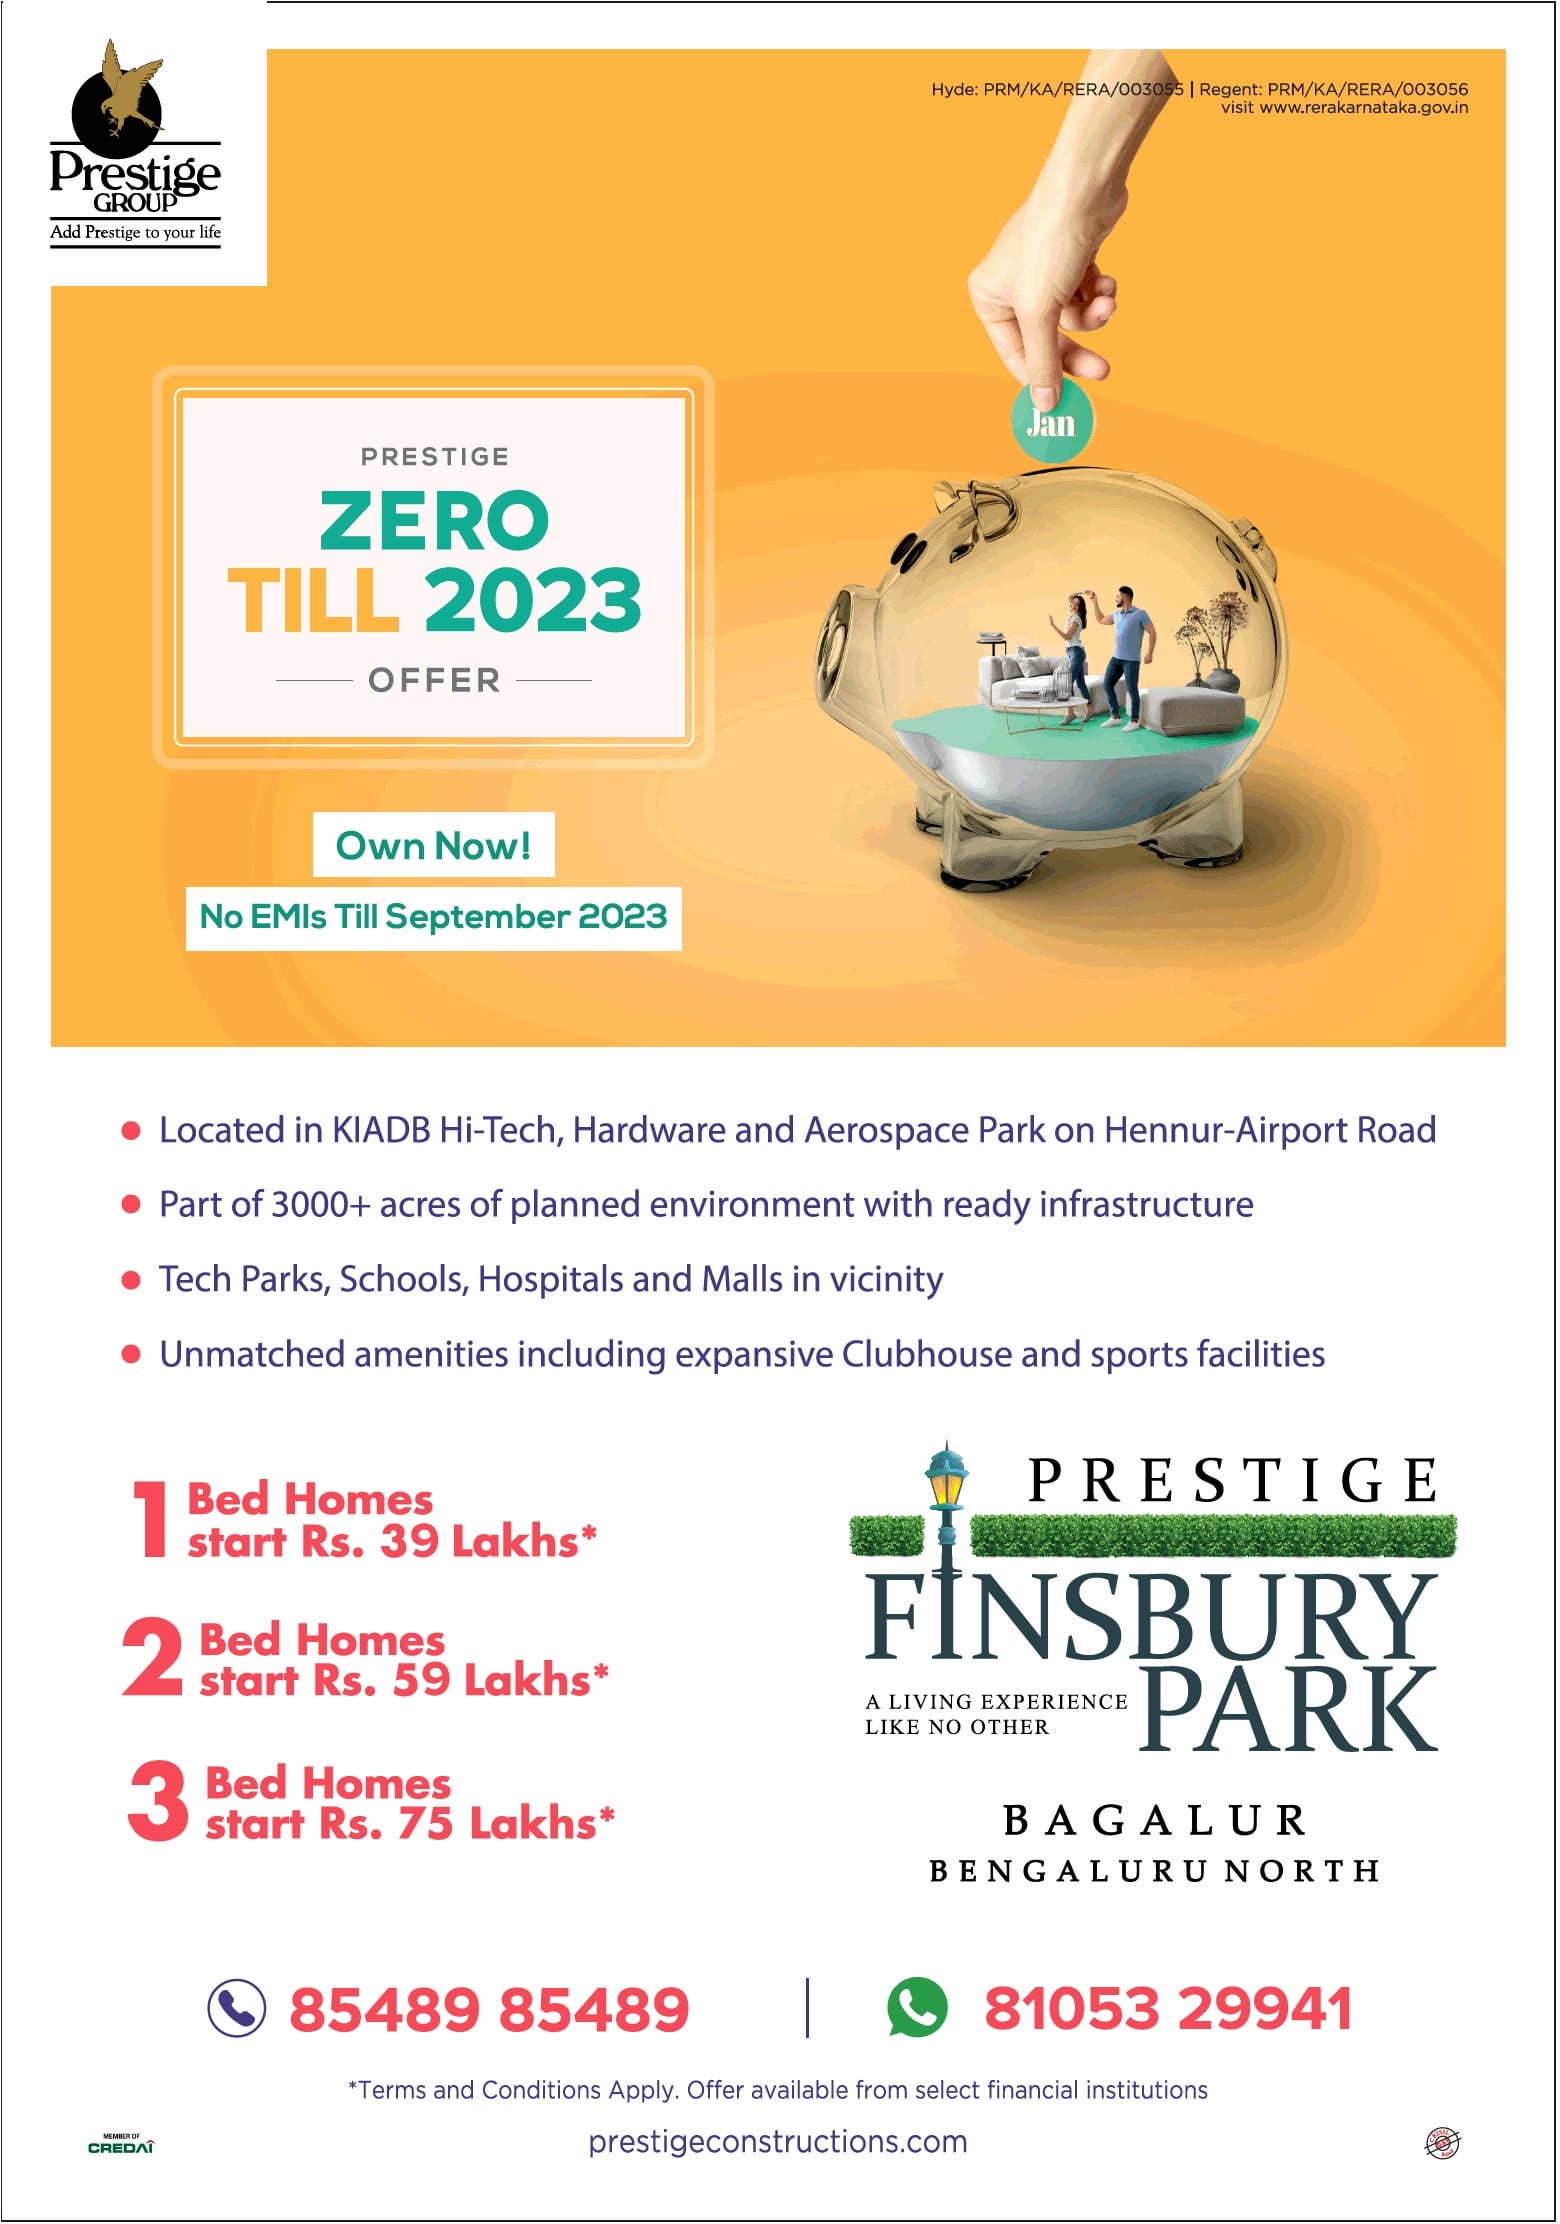 prestige-group-prestige-finsbury-park-ad-bangalore-times-07-02-2021